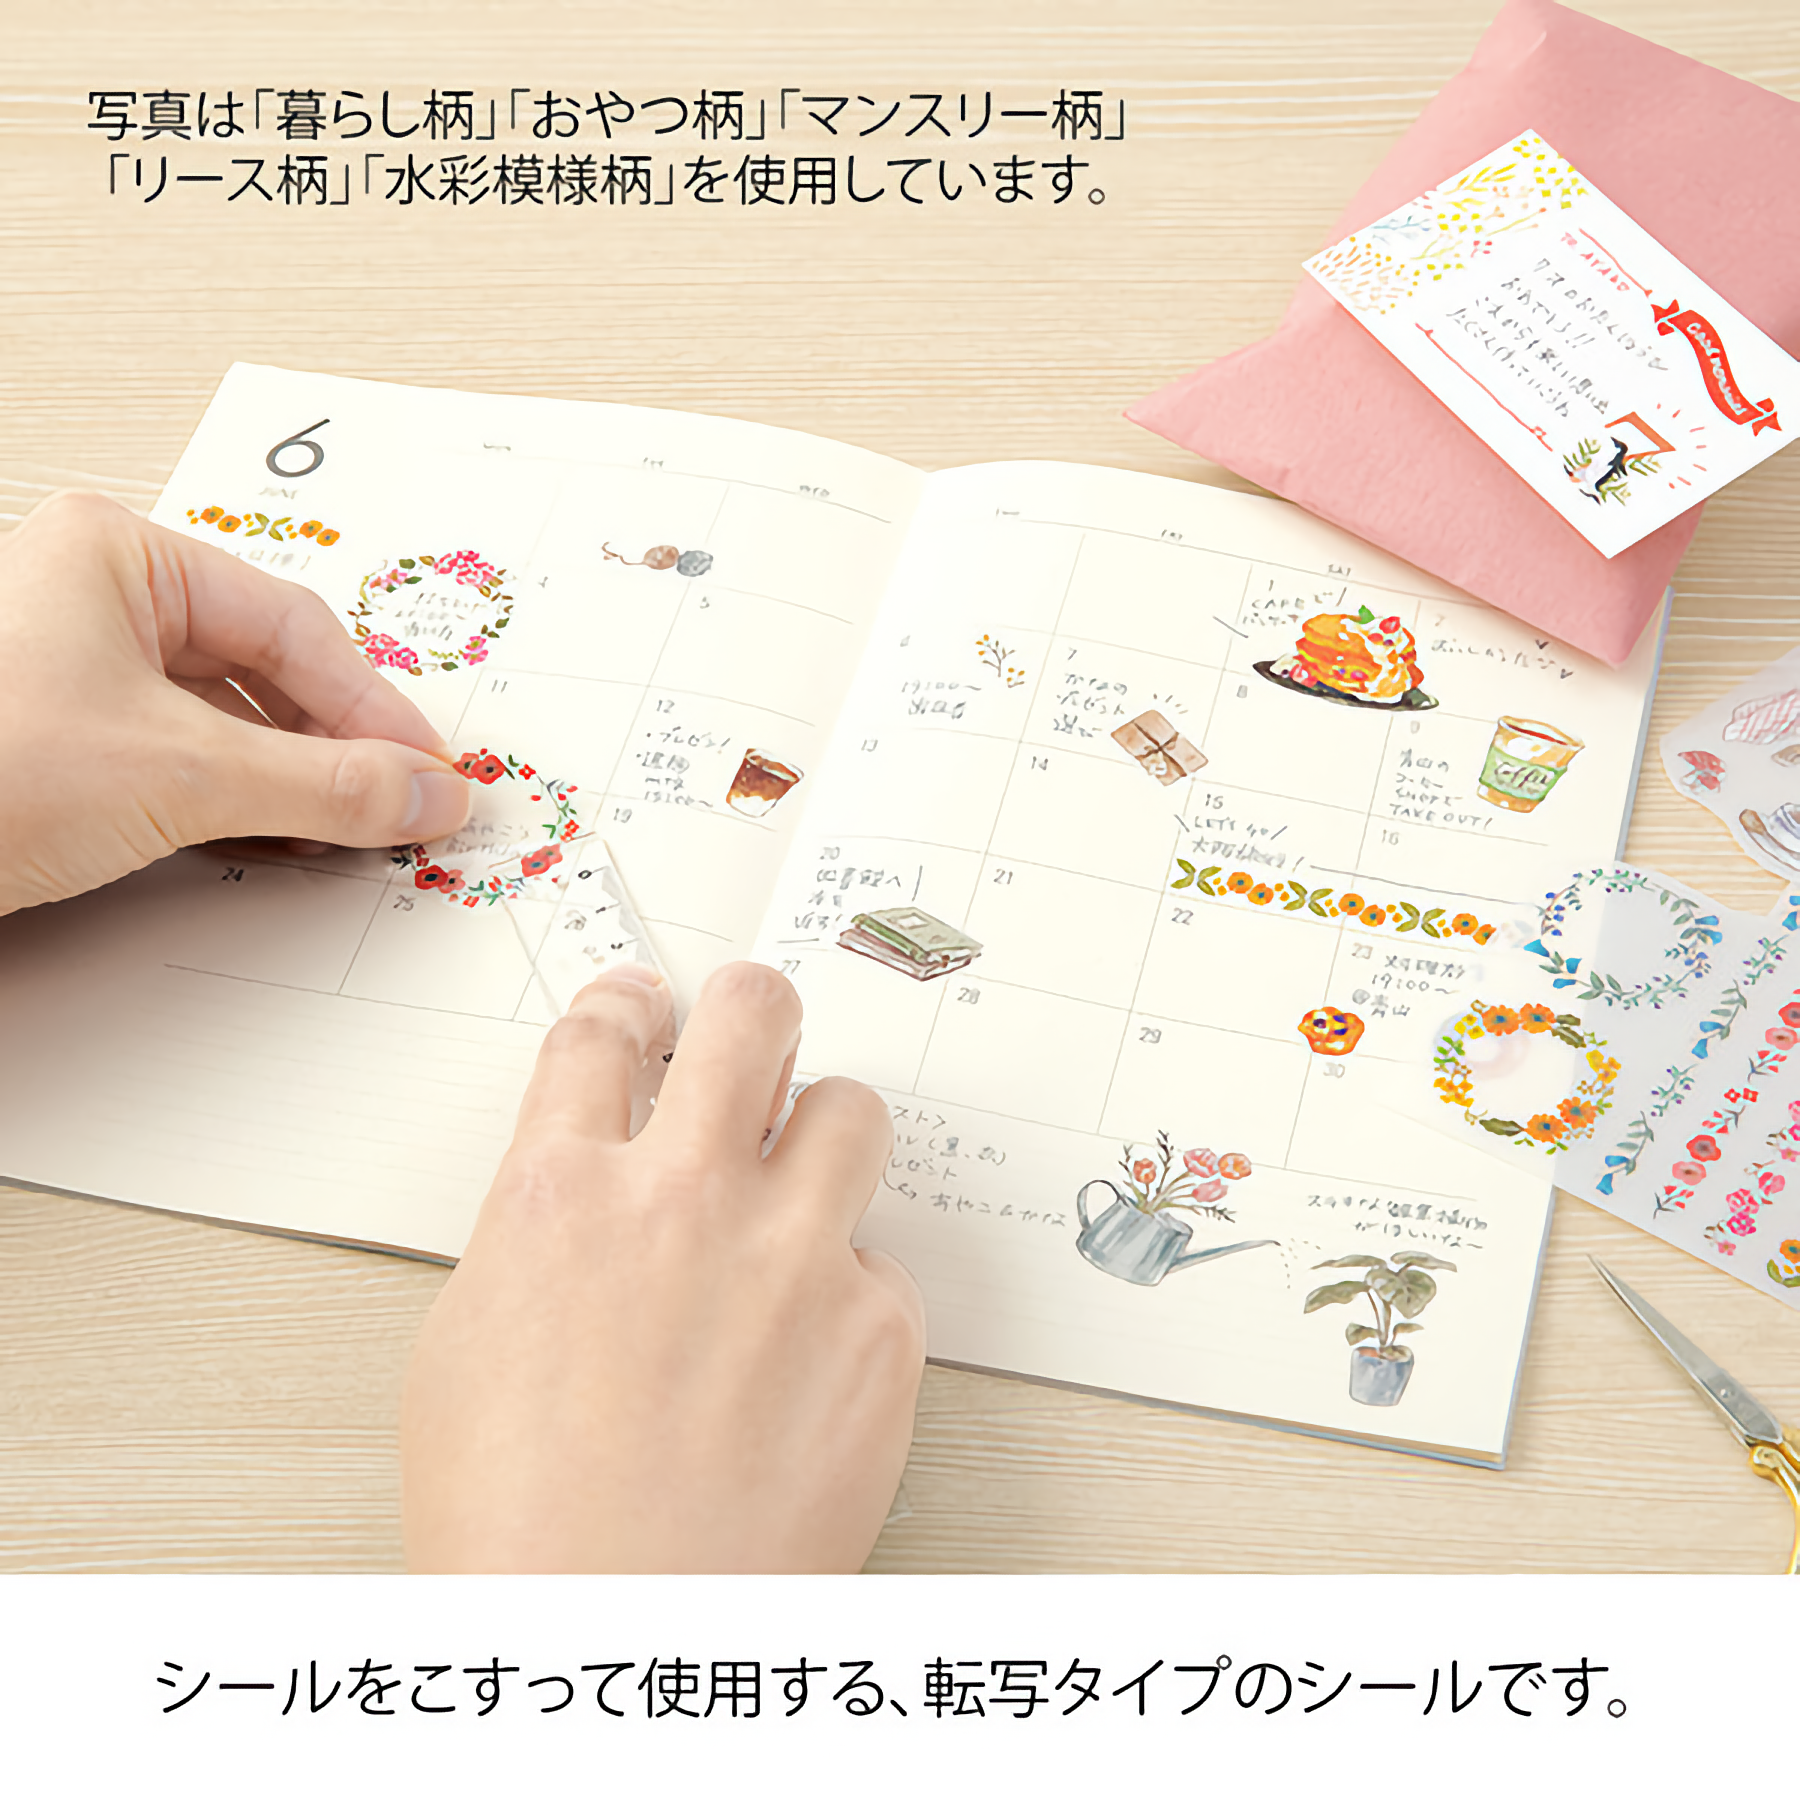 Midori Transfer Stickers Watercolor Patterns